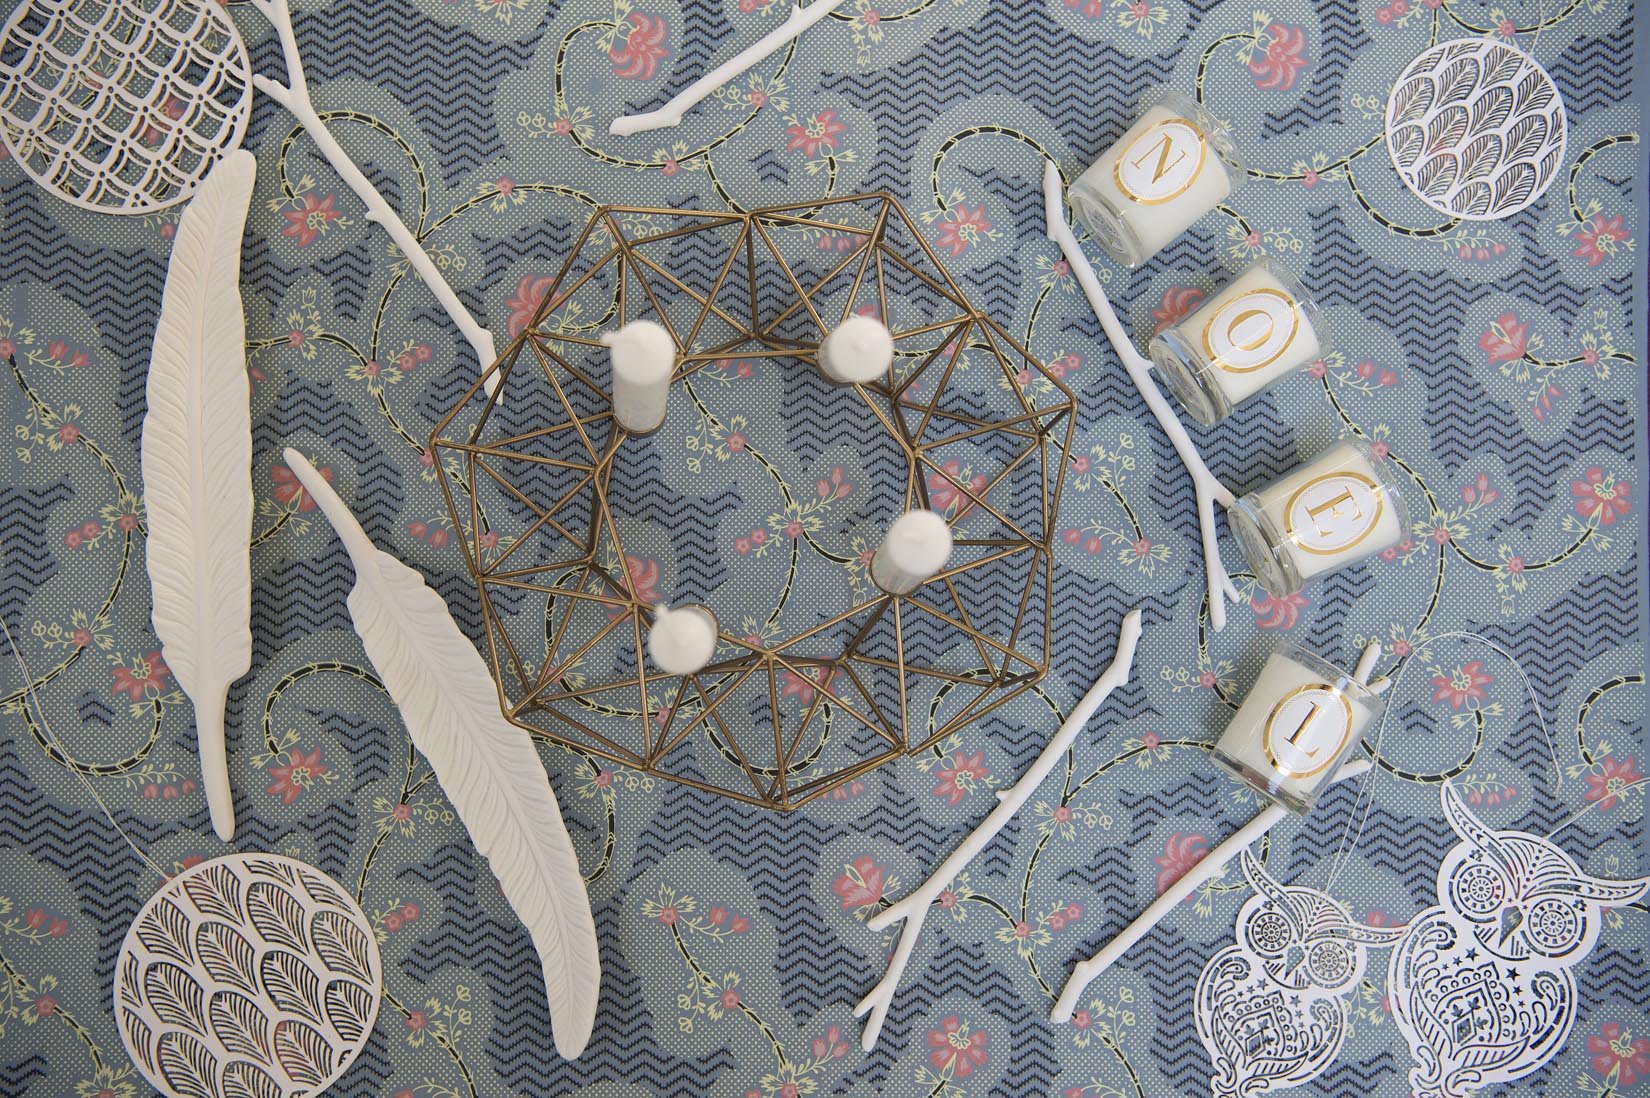 Decorative ceramic branches - Natalia Willmott